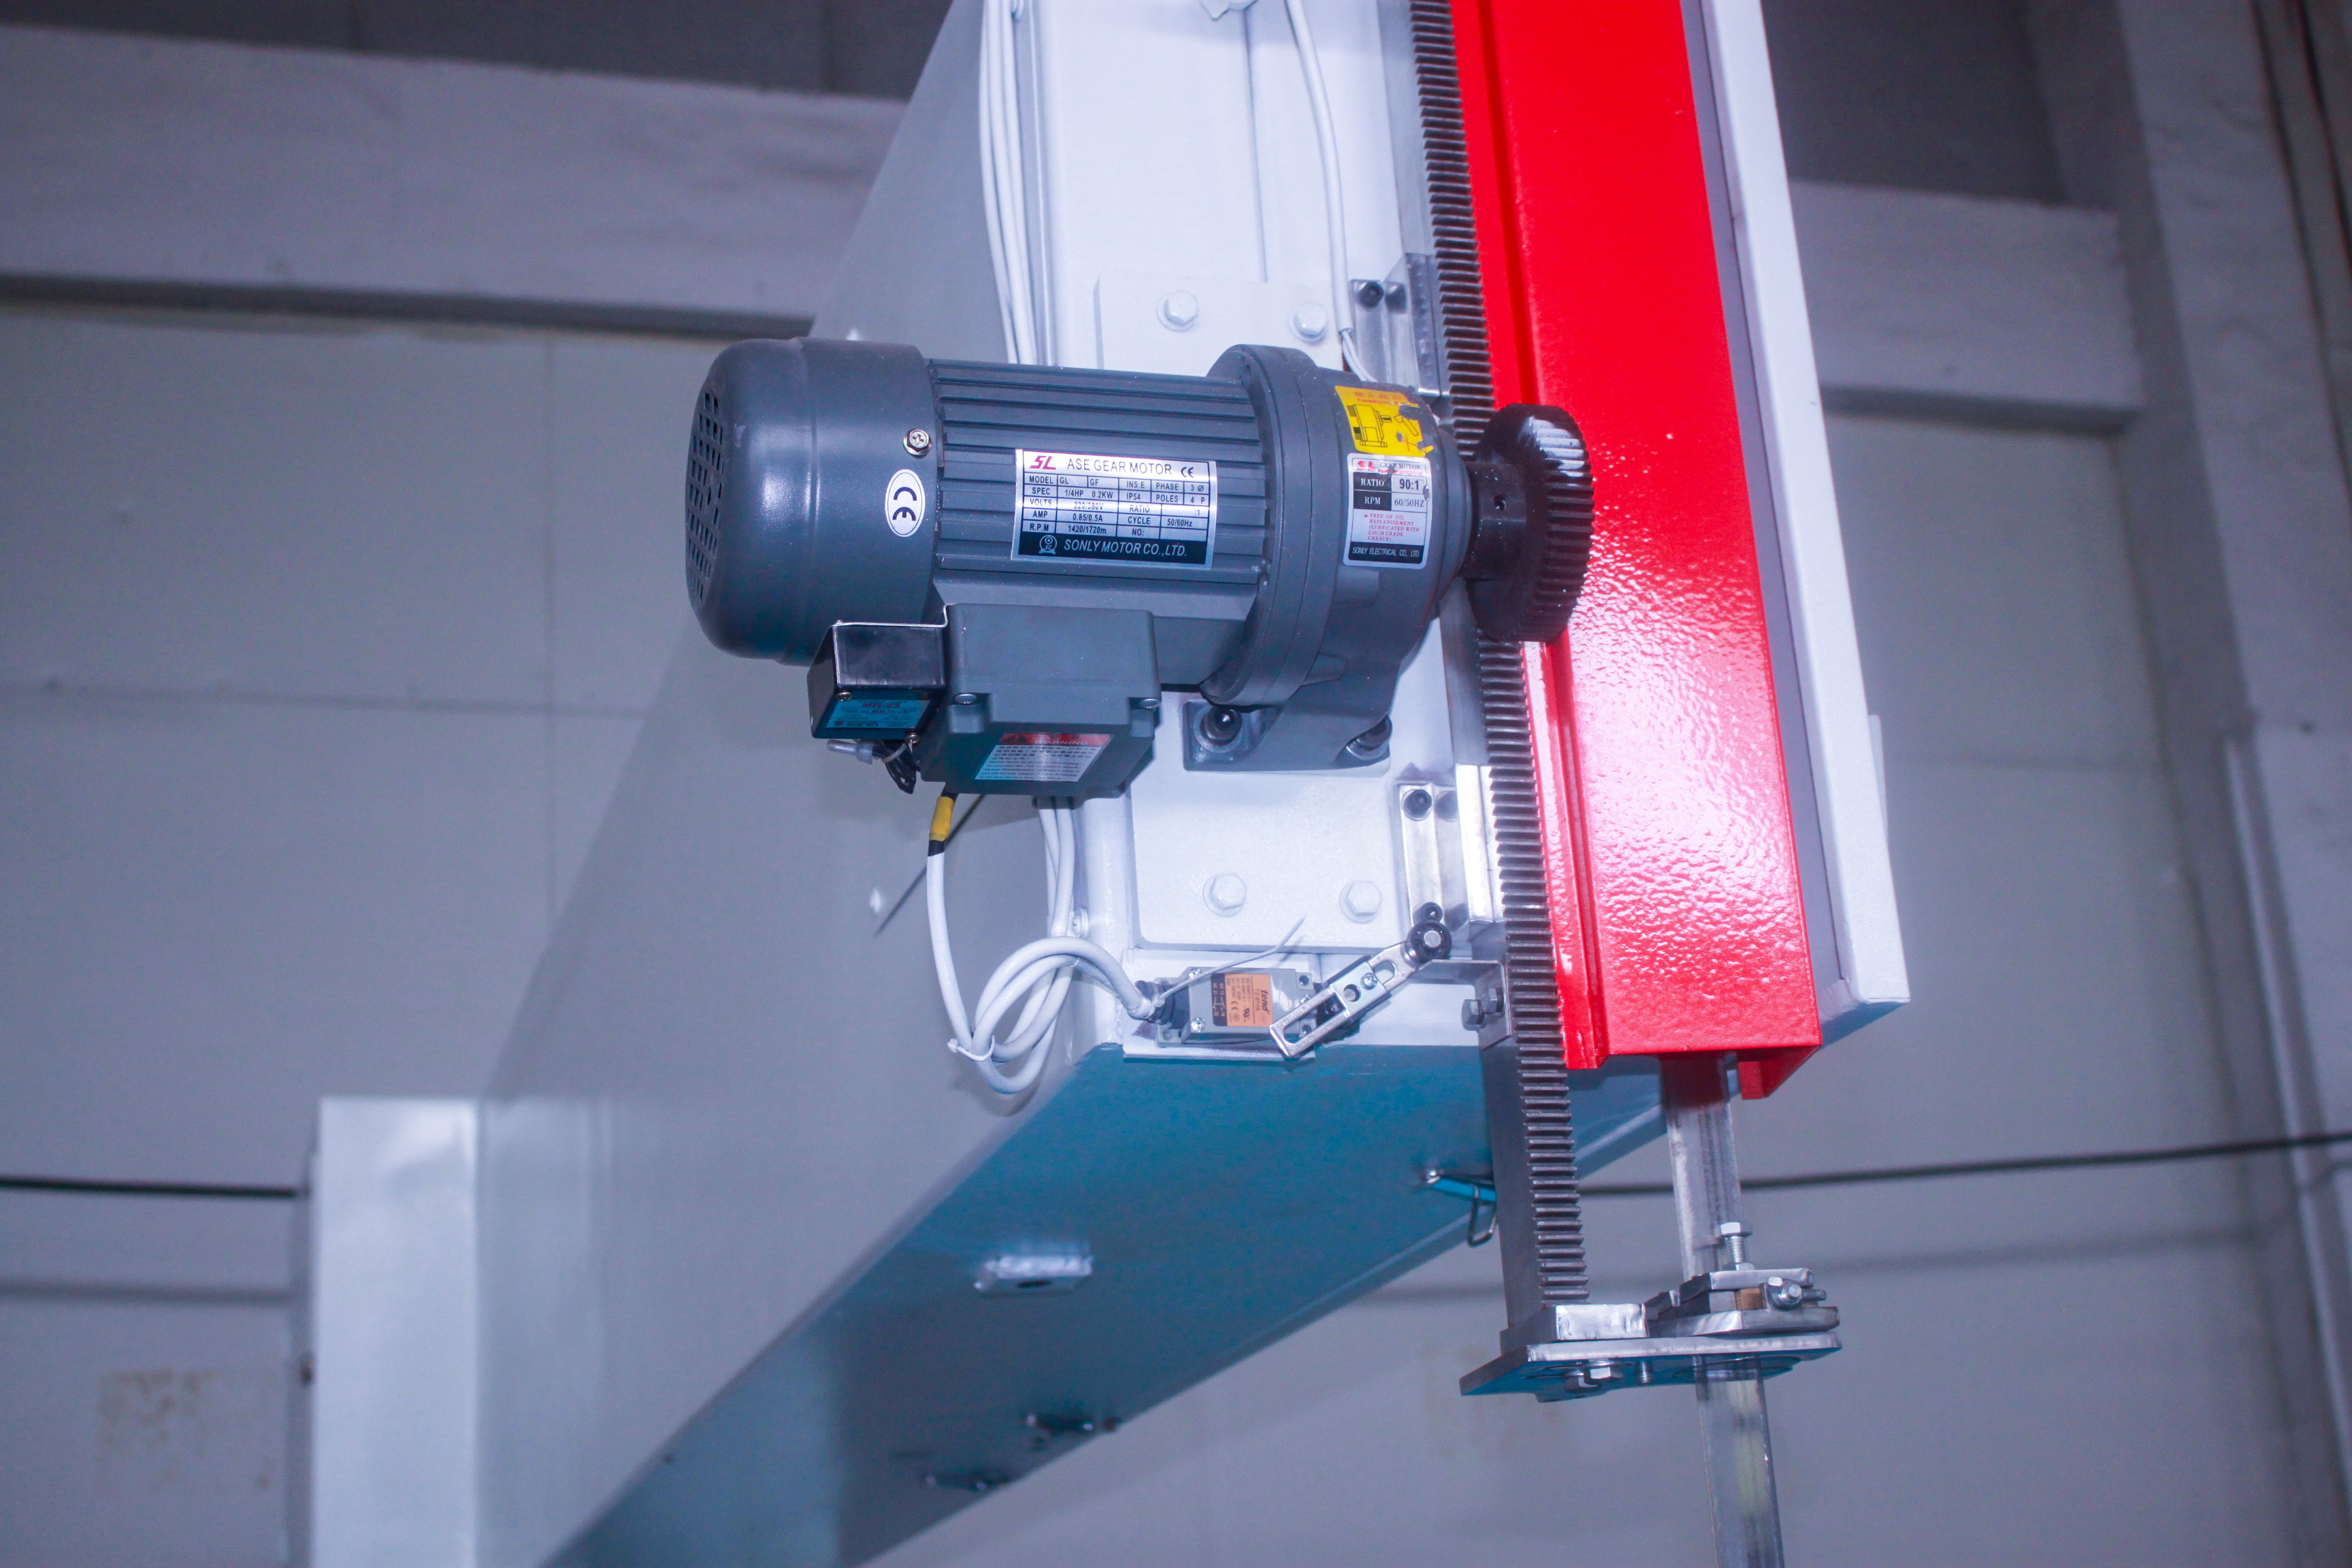 Mattress Sponge D&T manual vertical cutting saw vertical foam cutting machine With Linear Guide 1.74kw Power